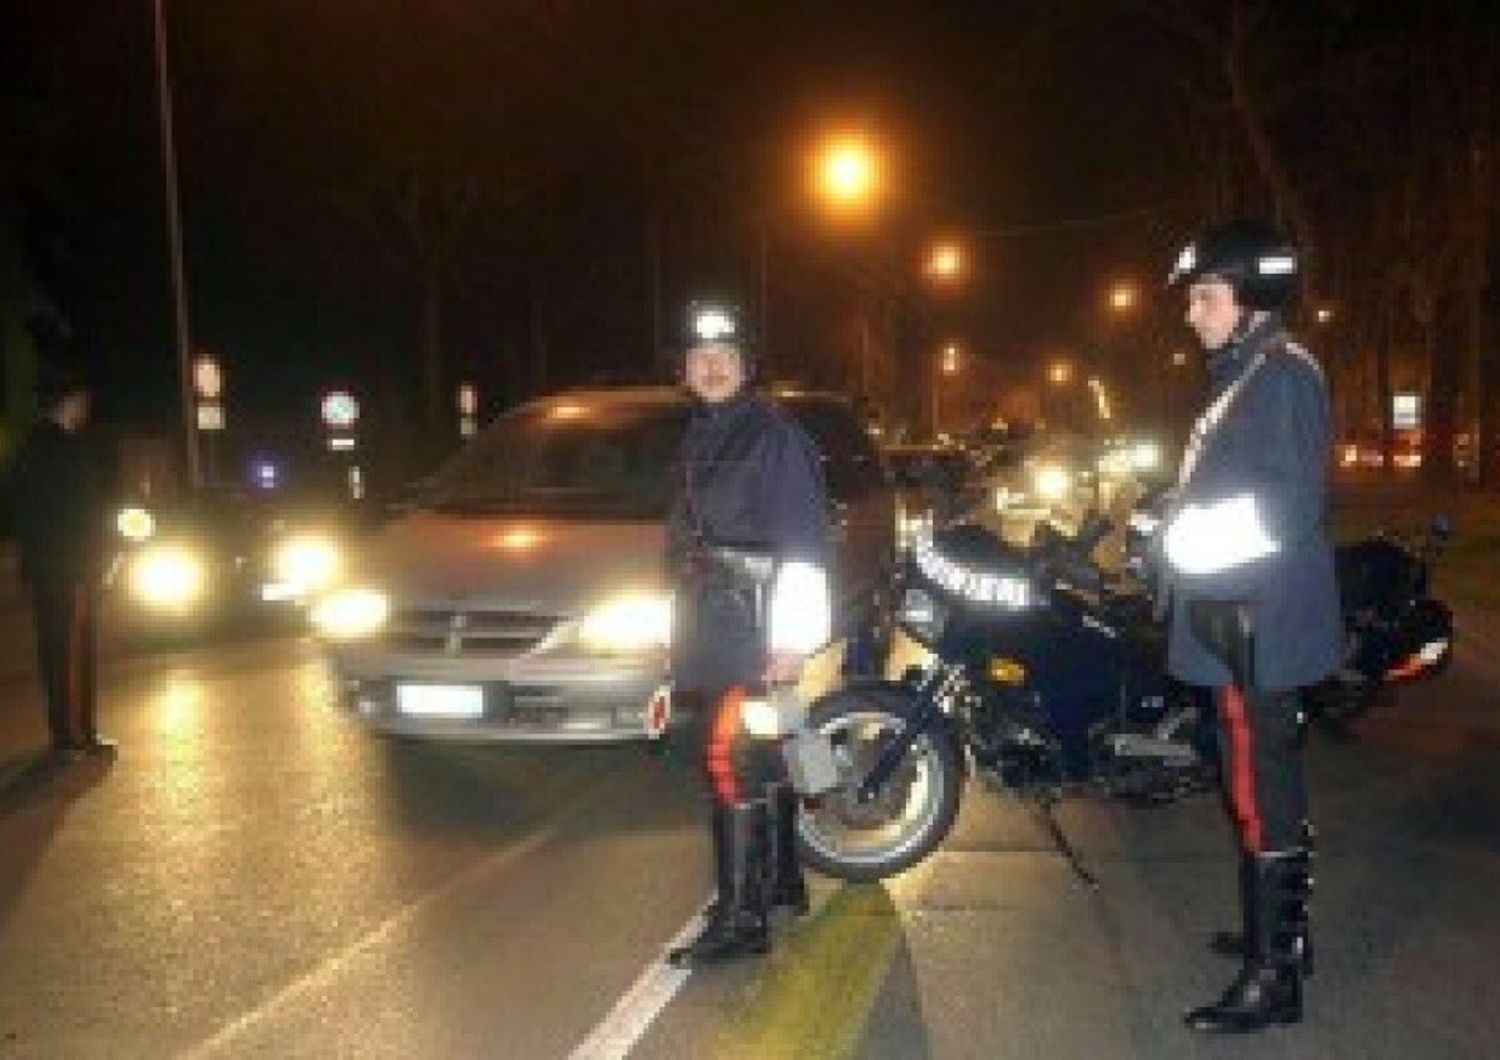 carabinieri in strada